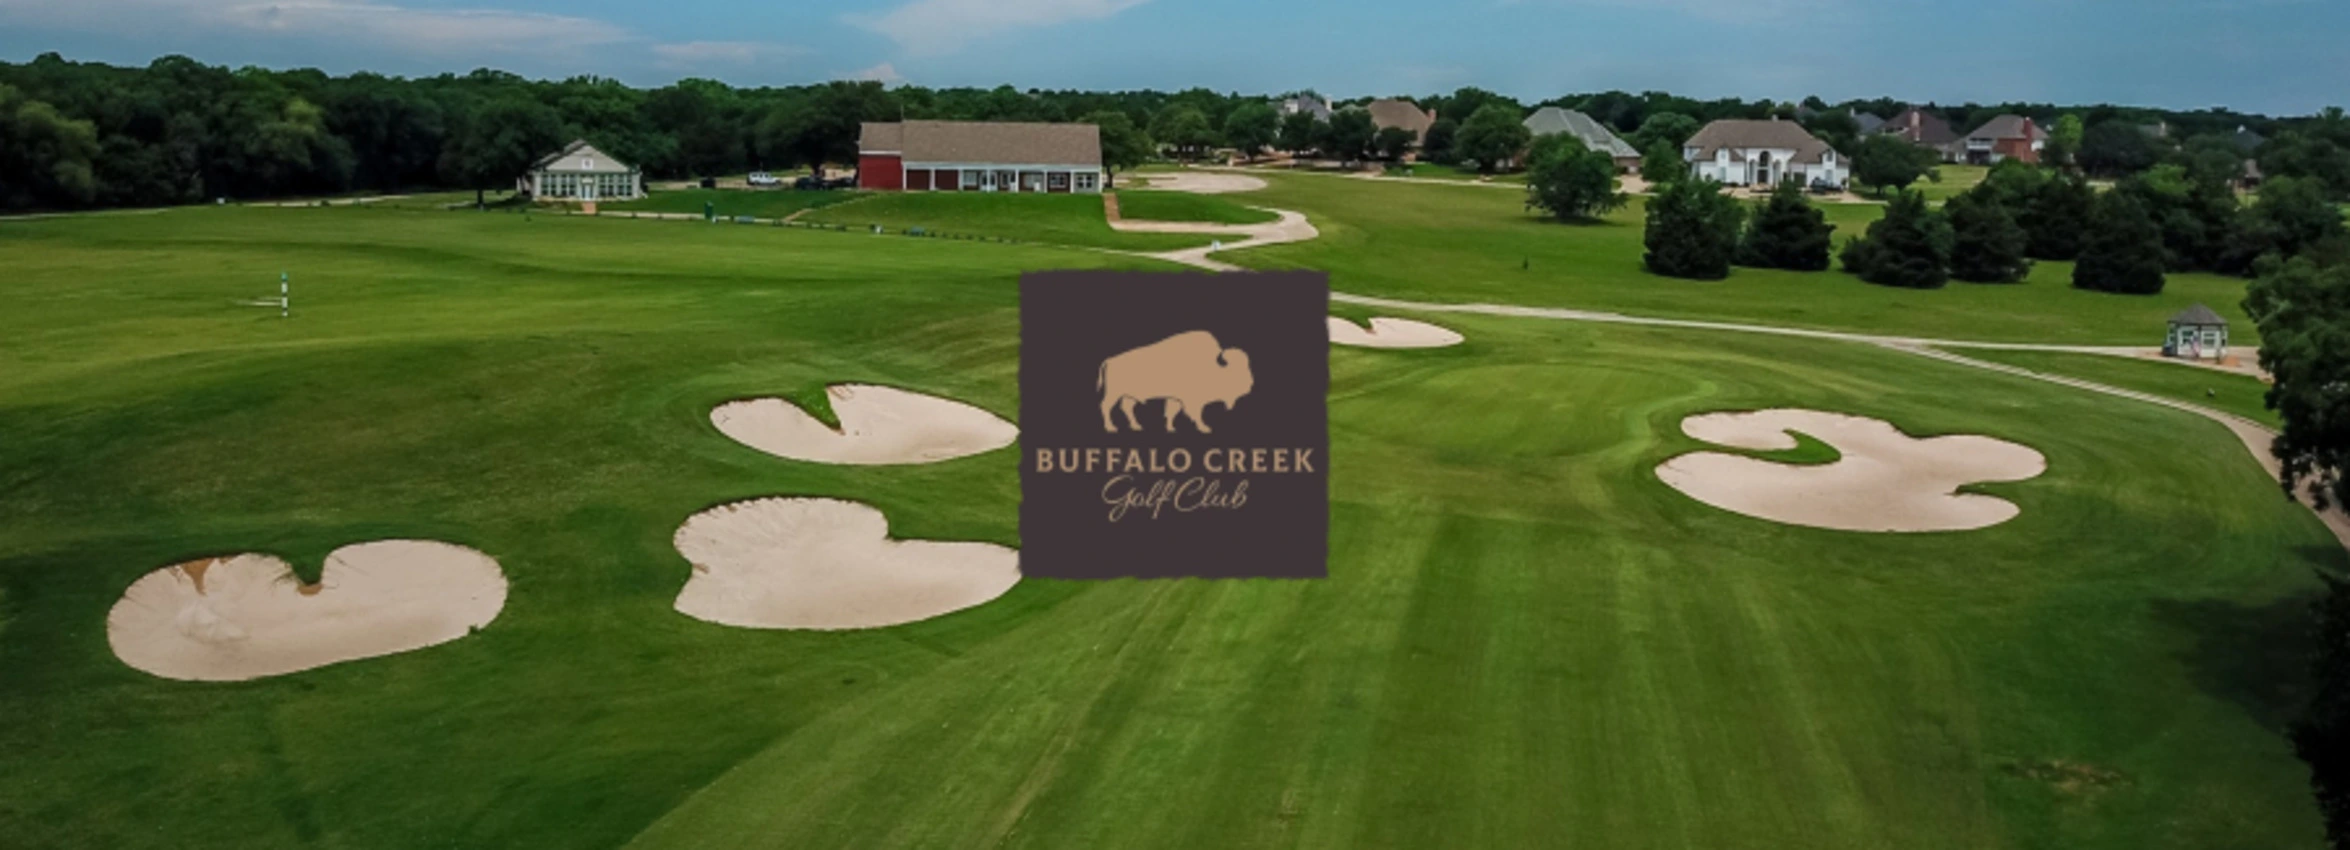 Buffalo-Creek-Golf-Club_Desktop_ET